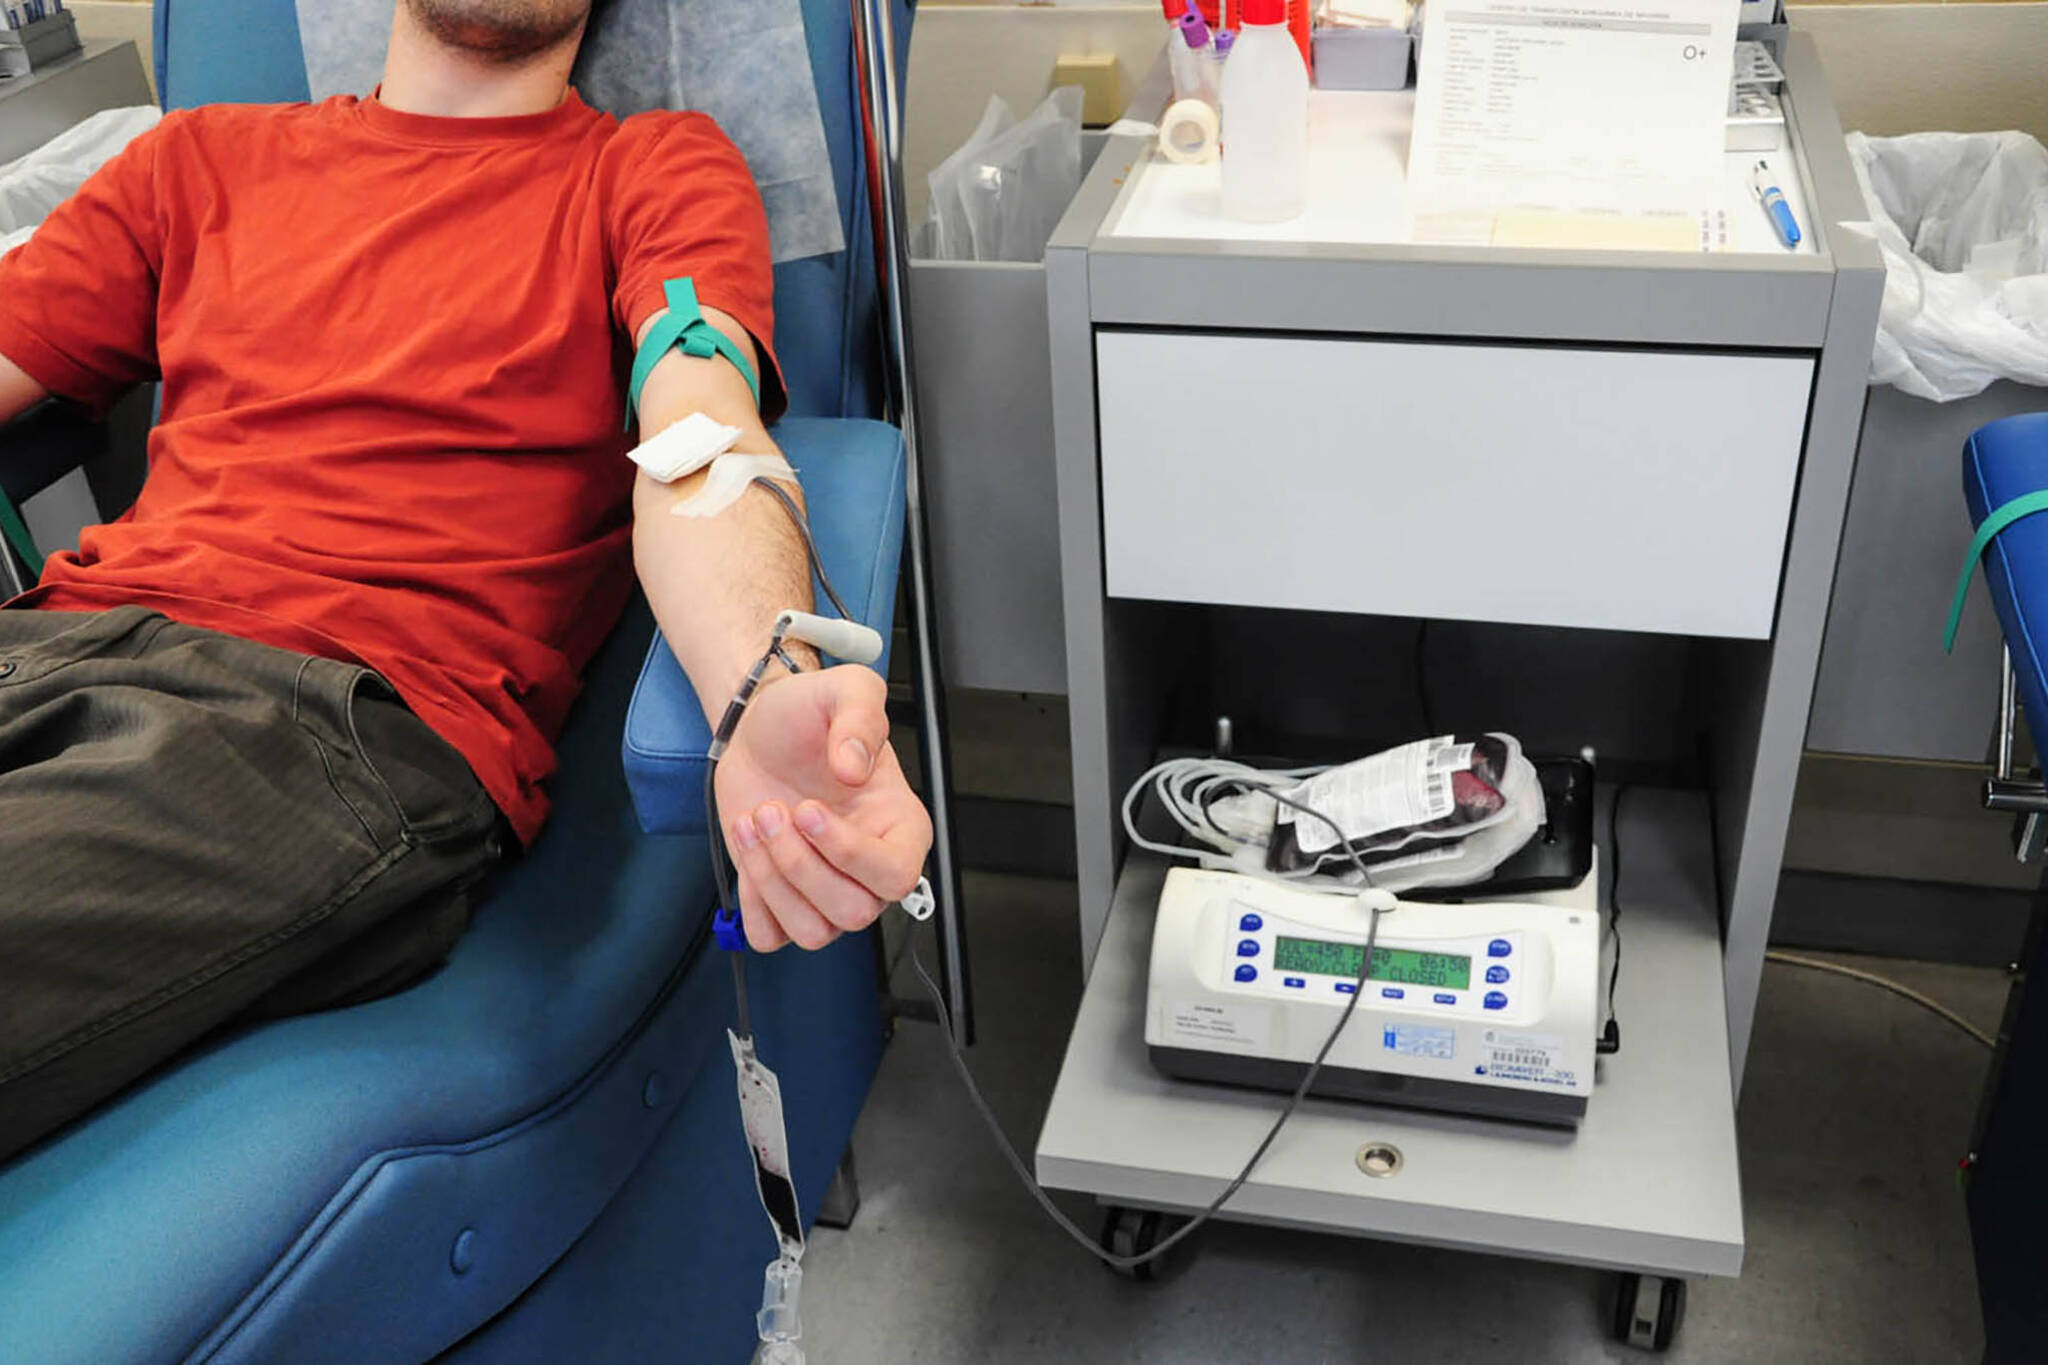 Метод донора. Аппарат для гемотрансфузии. Аппарат для переливания крови. Аппарат для гемотрансфузии крови. Аппарат для взятия крови донорской.